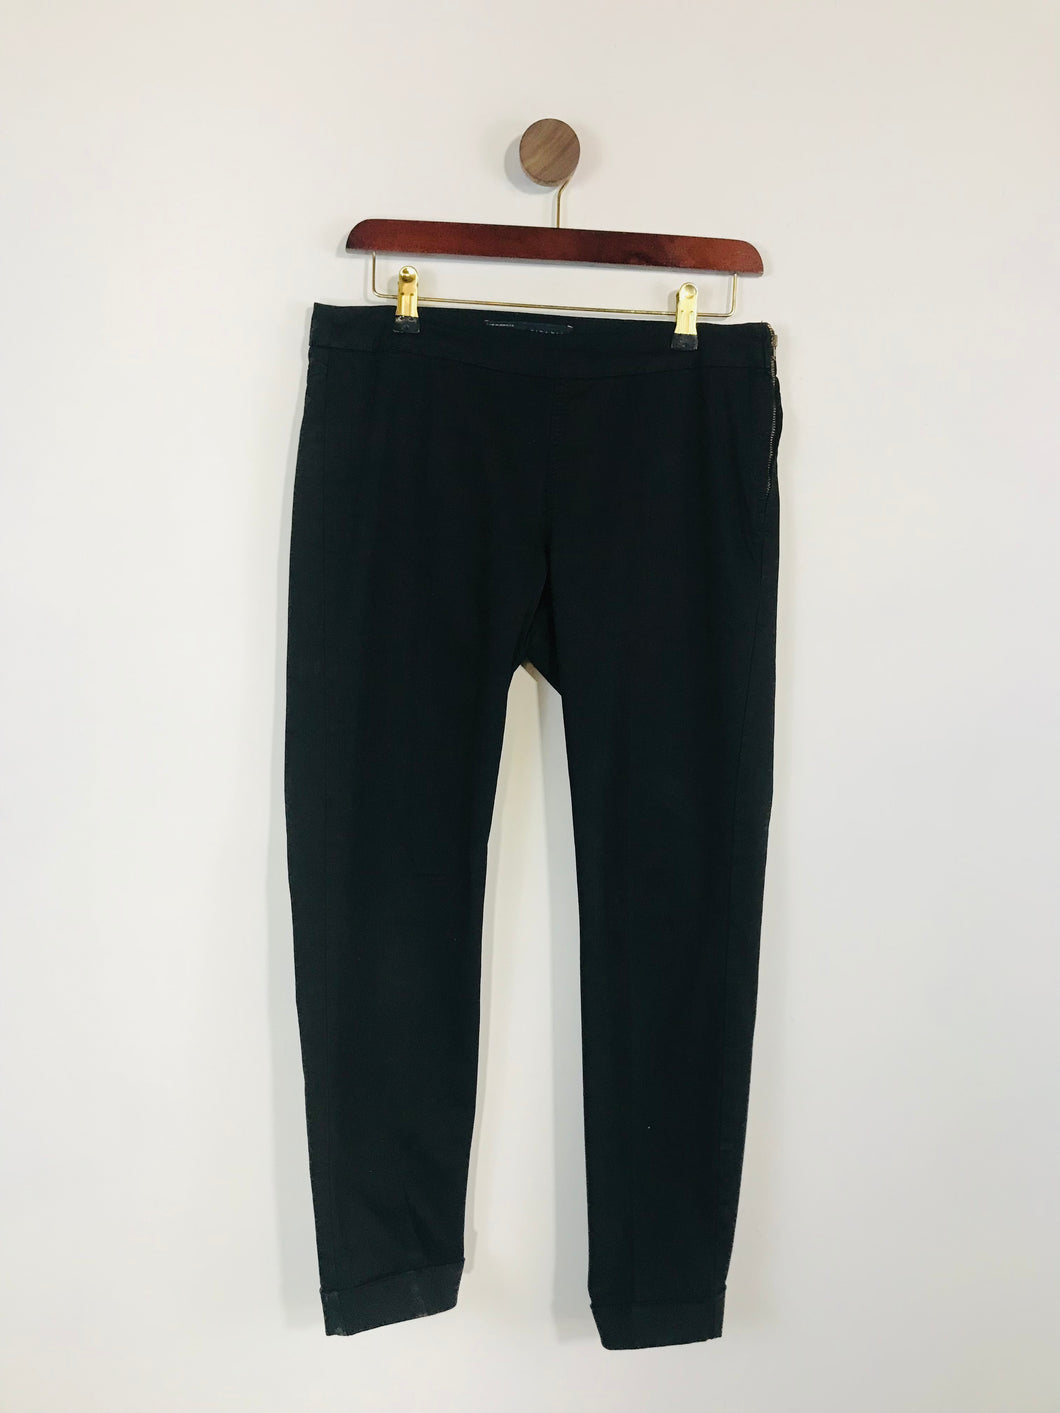 Zara Women's High Waisted Skinny Smart Trousers | M UK10-12 | Black